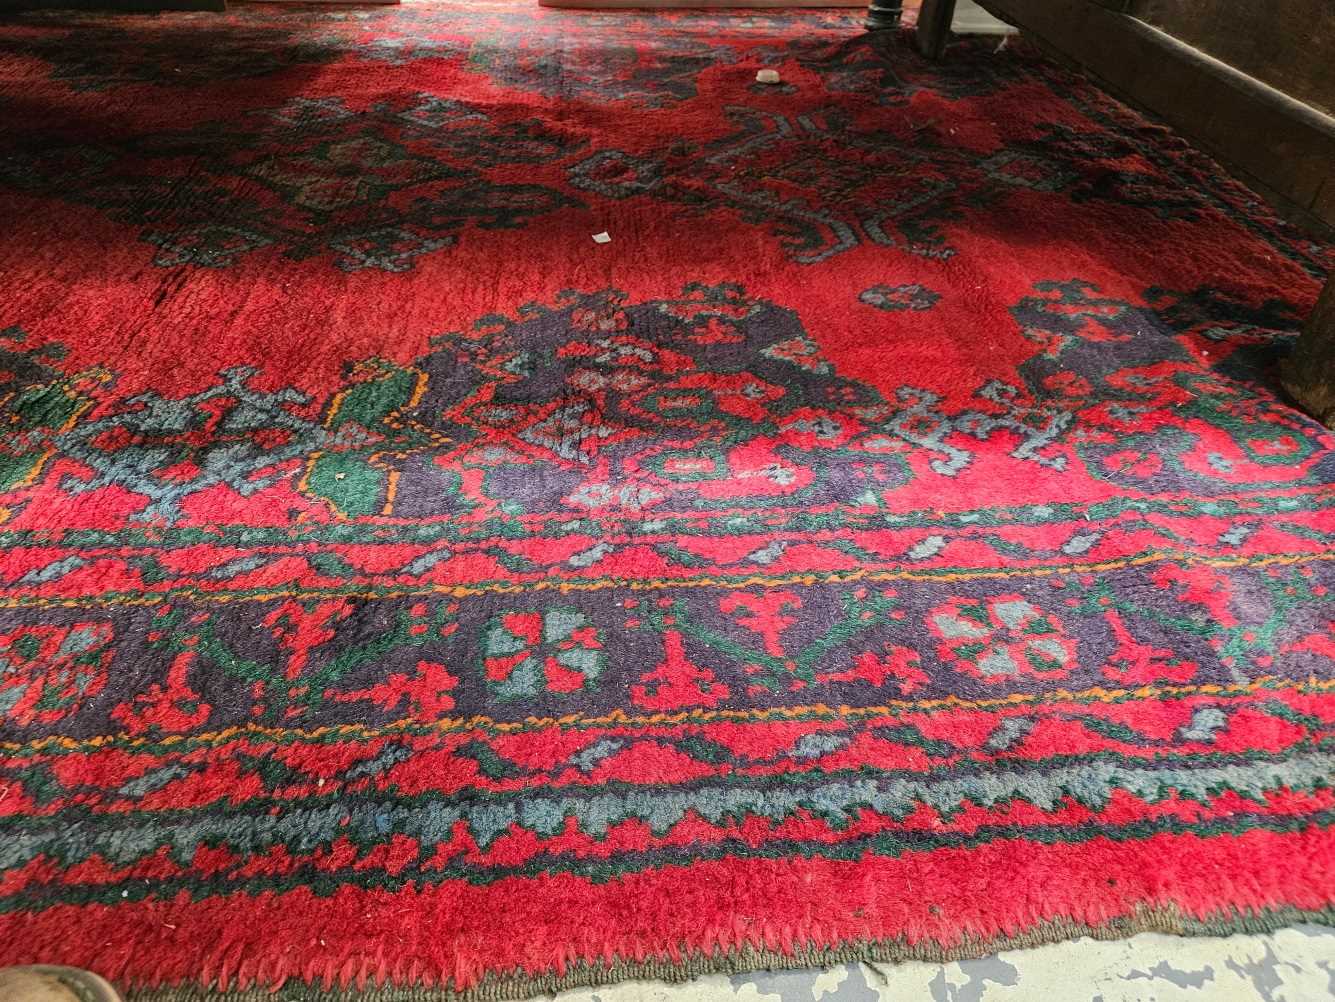 Turkish Oushak rug Measurements 264 x 188cms.